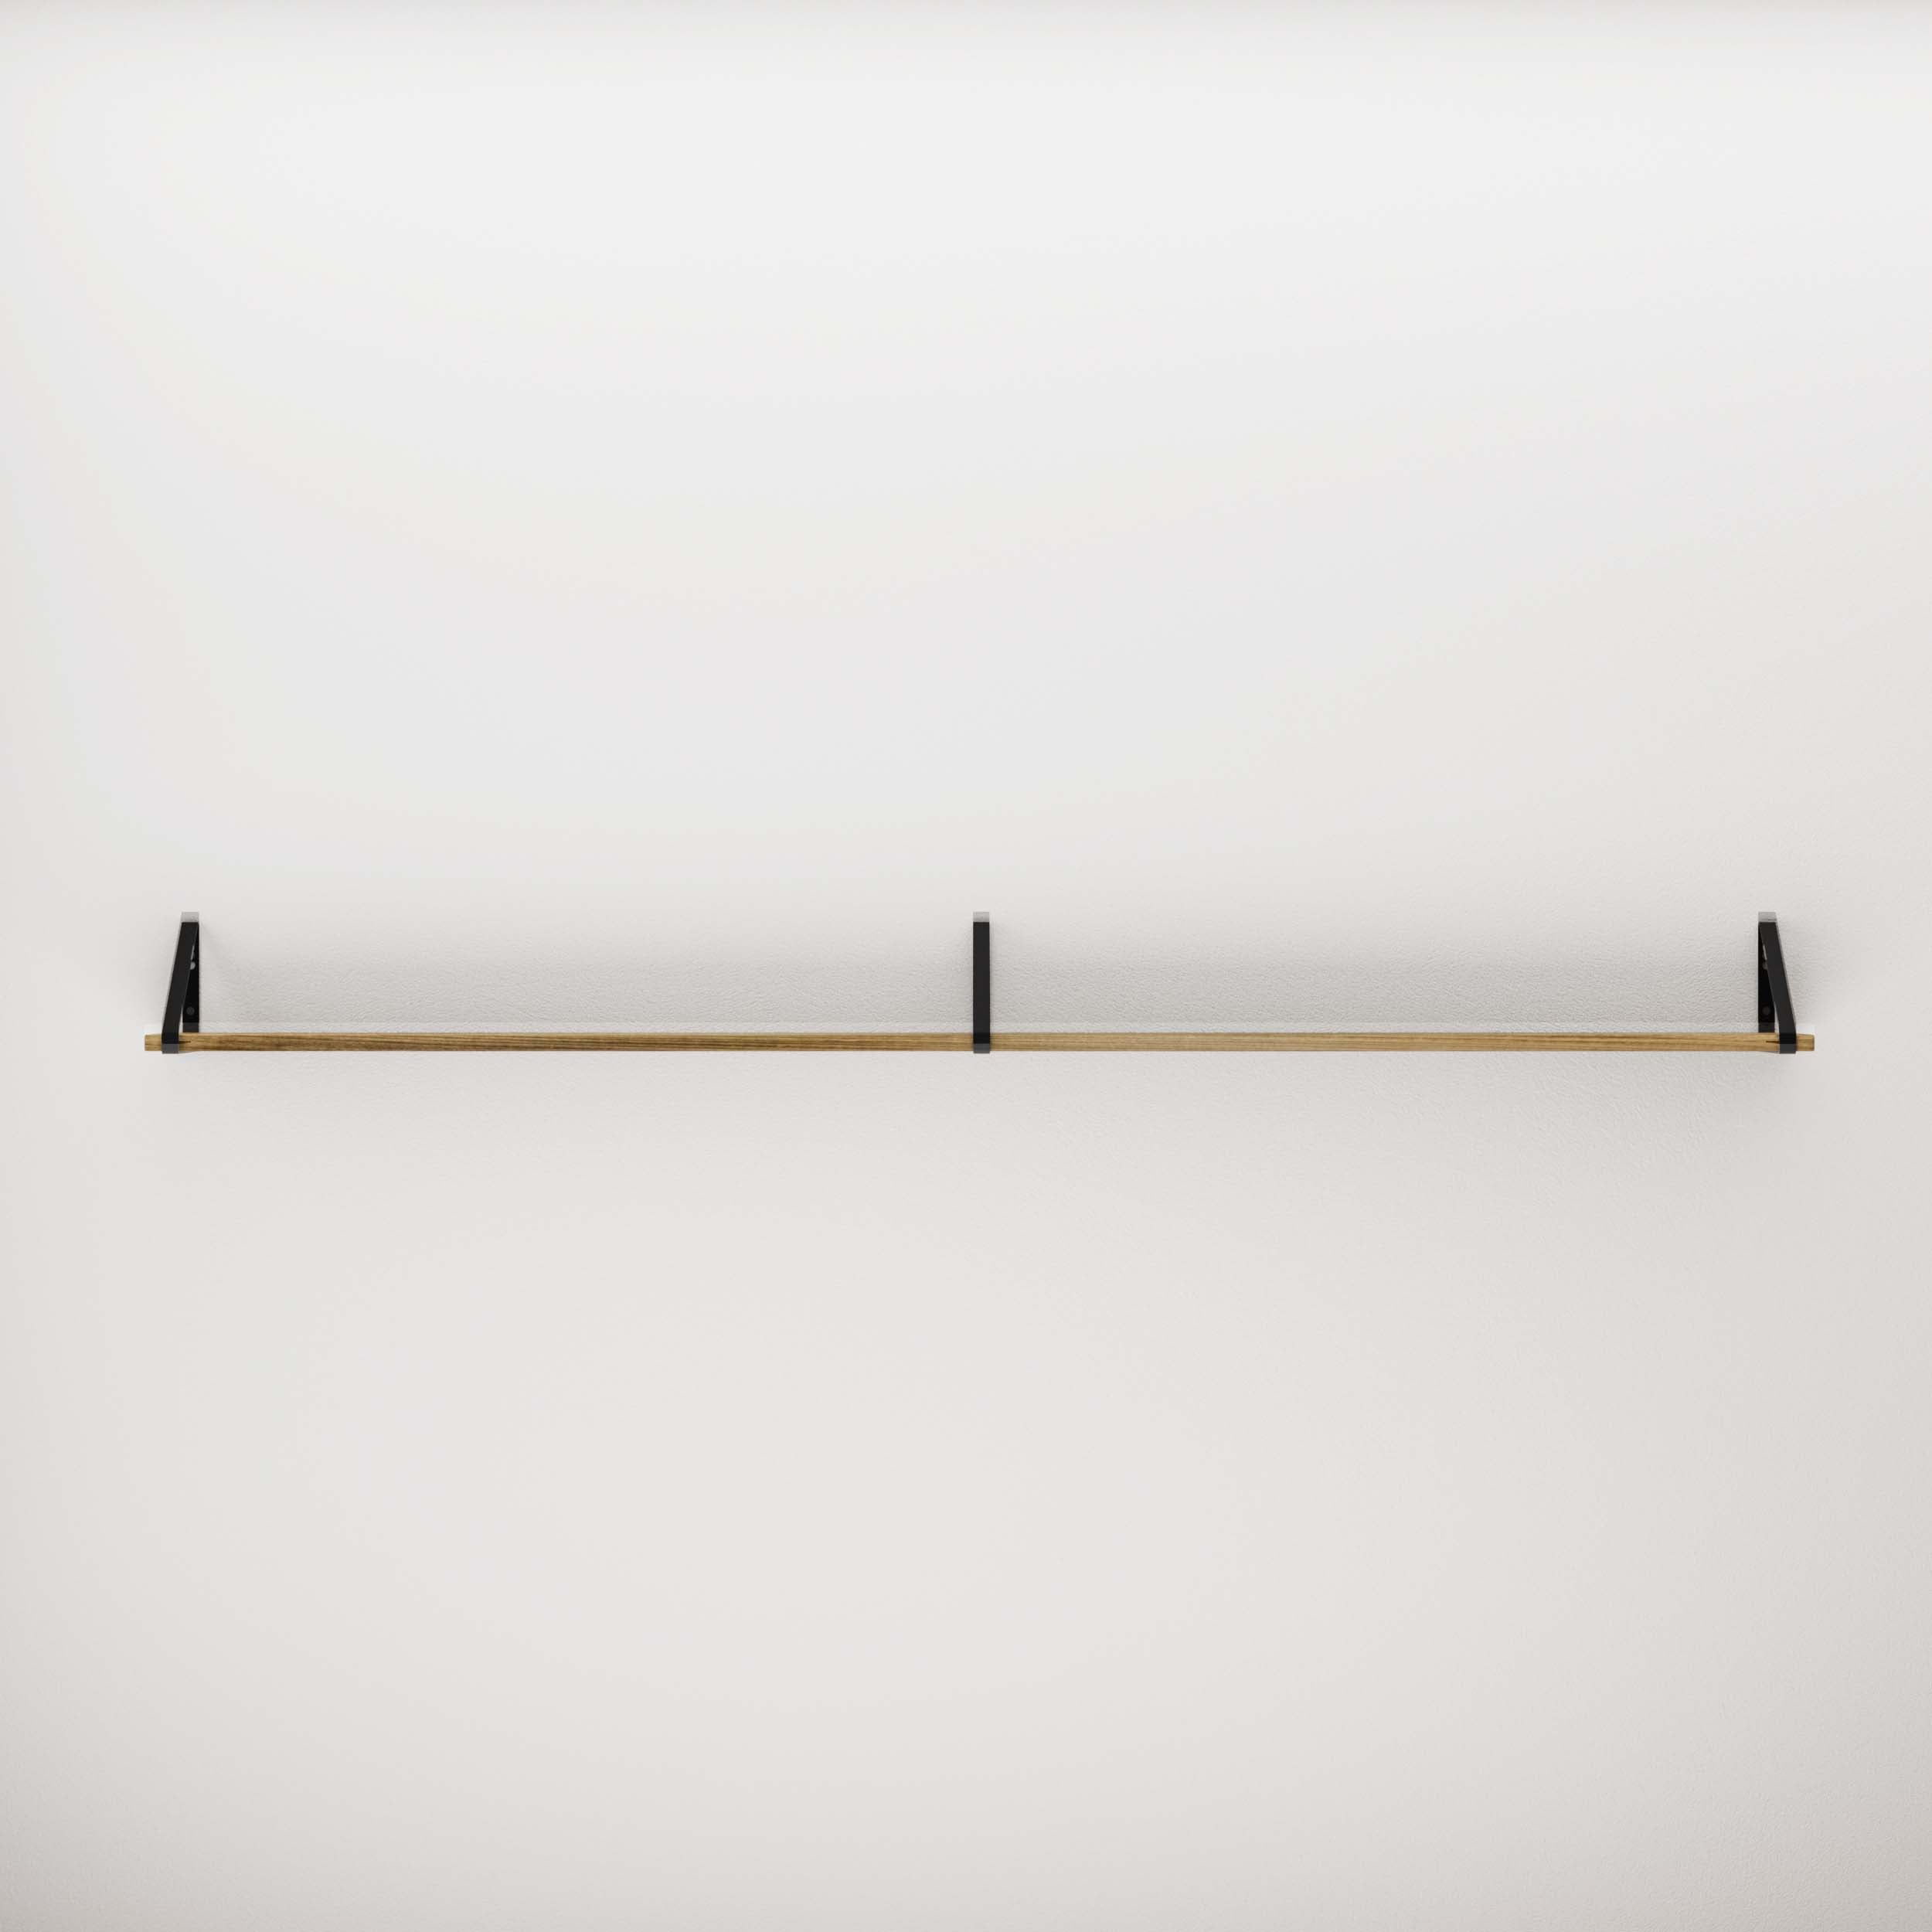 Empty heavy duty shelf against a white backdrop, emphasizing its sleek and modern design.